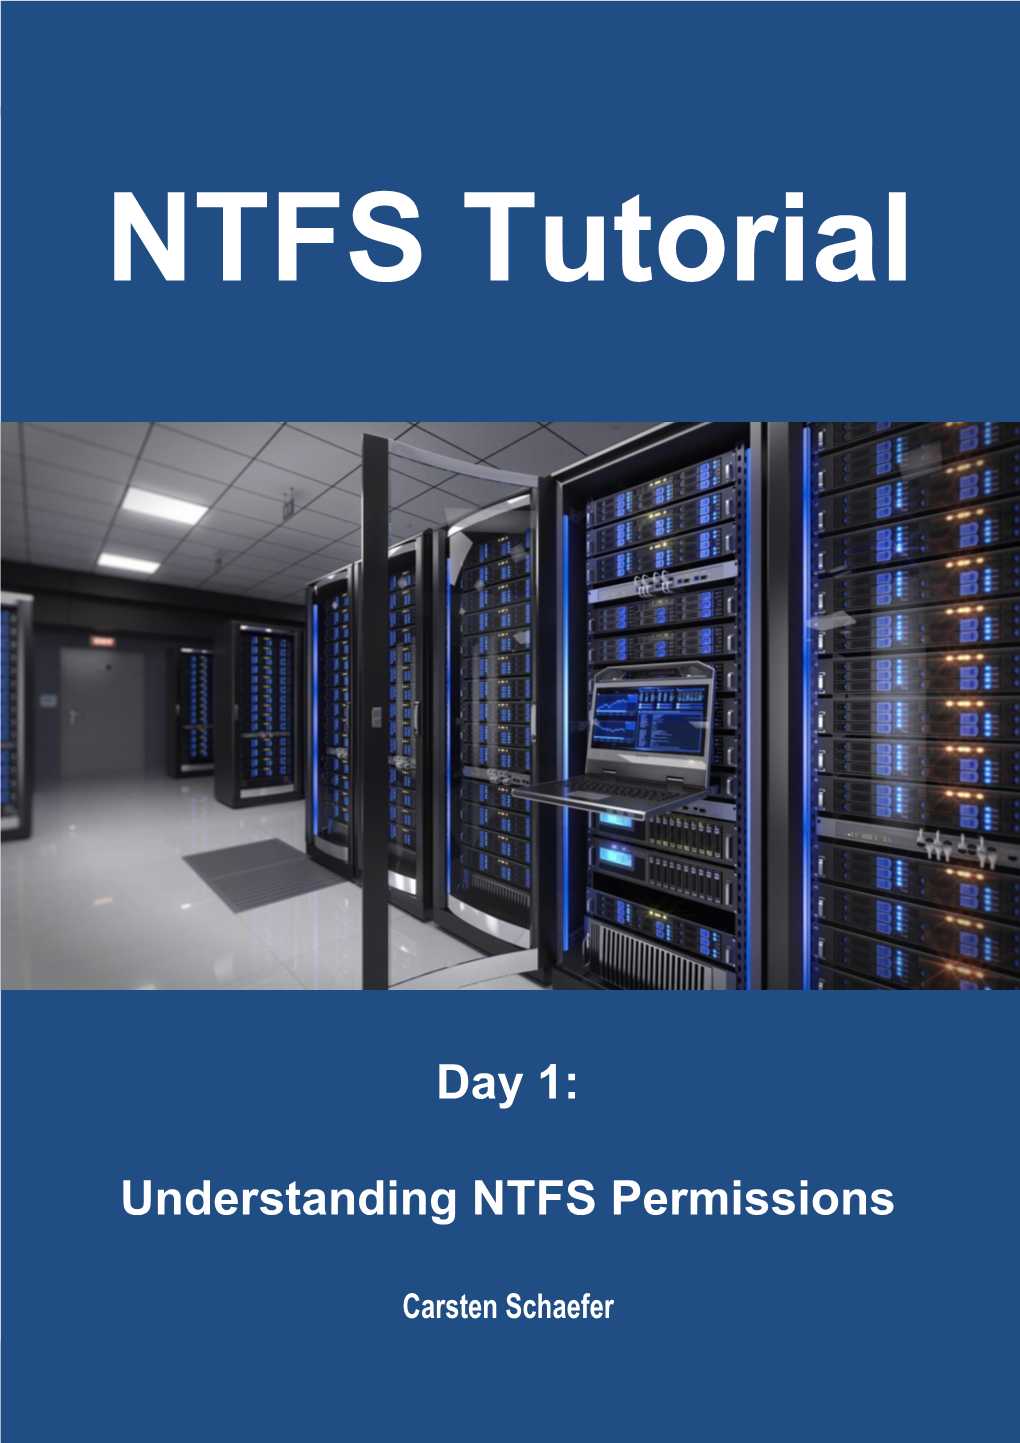 Day 1: Understanding NTFS Permissions